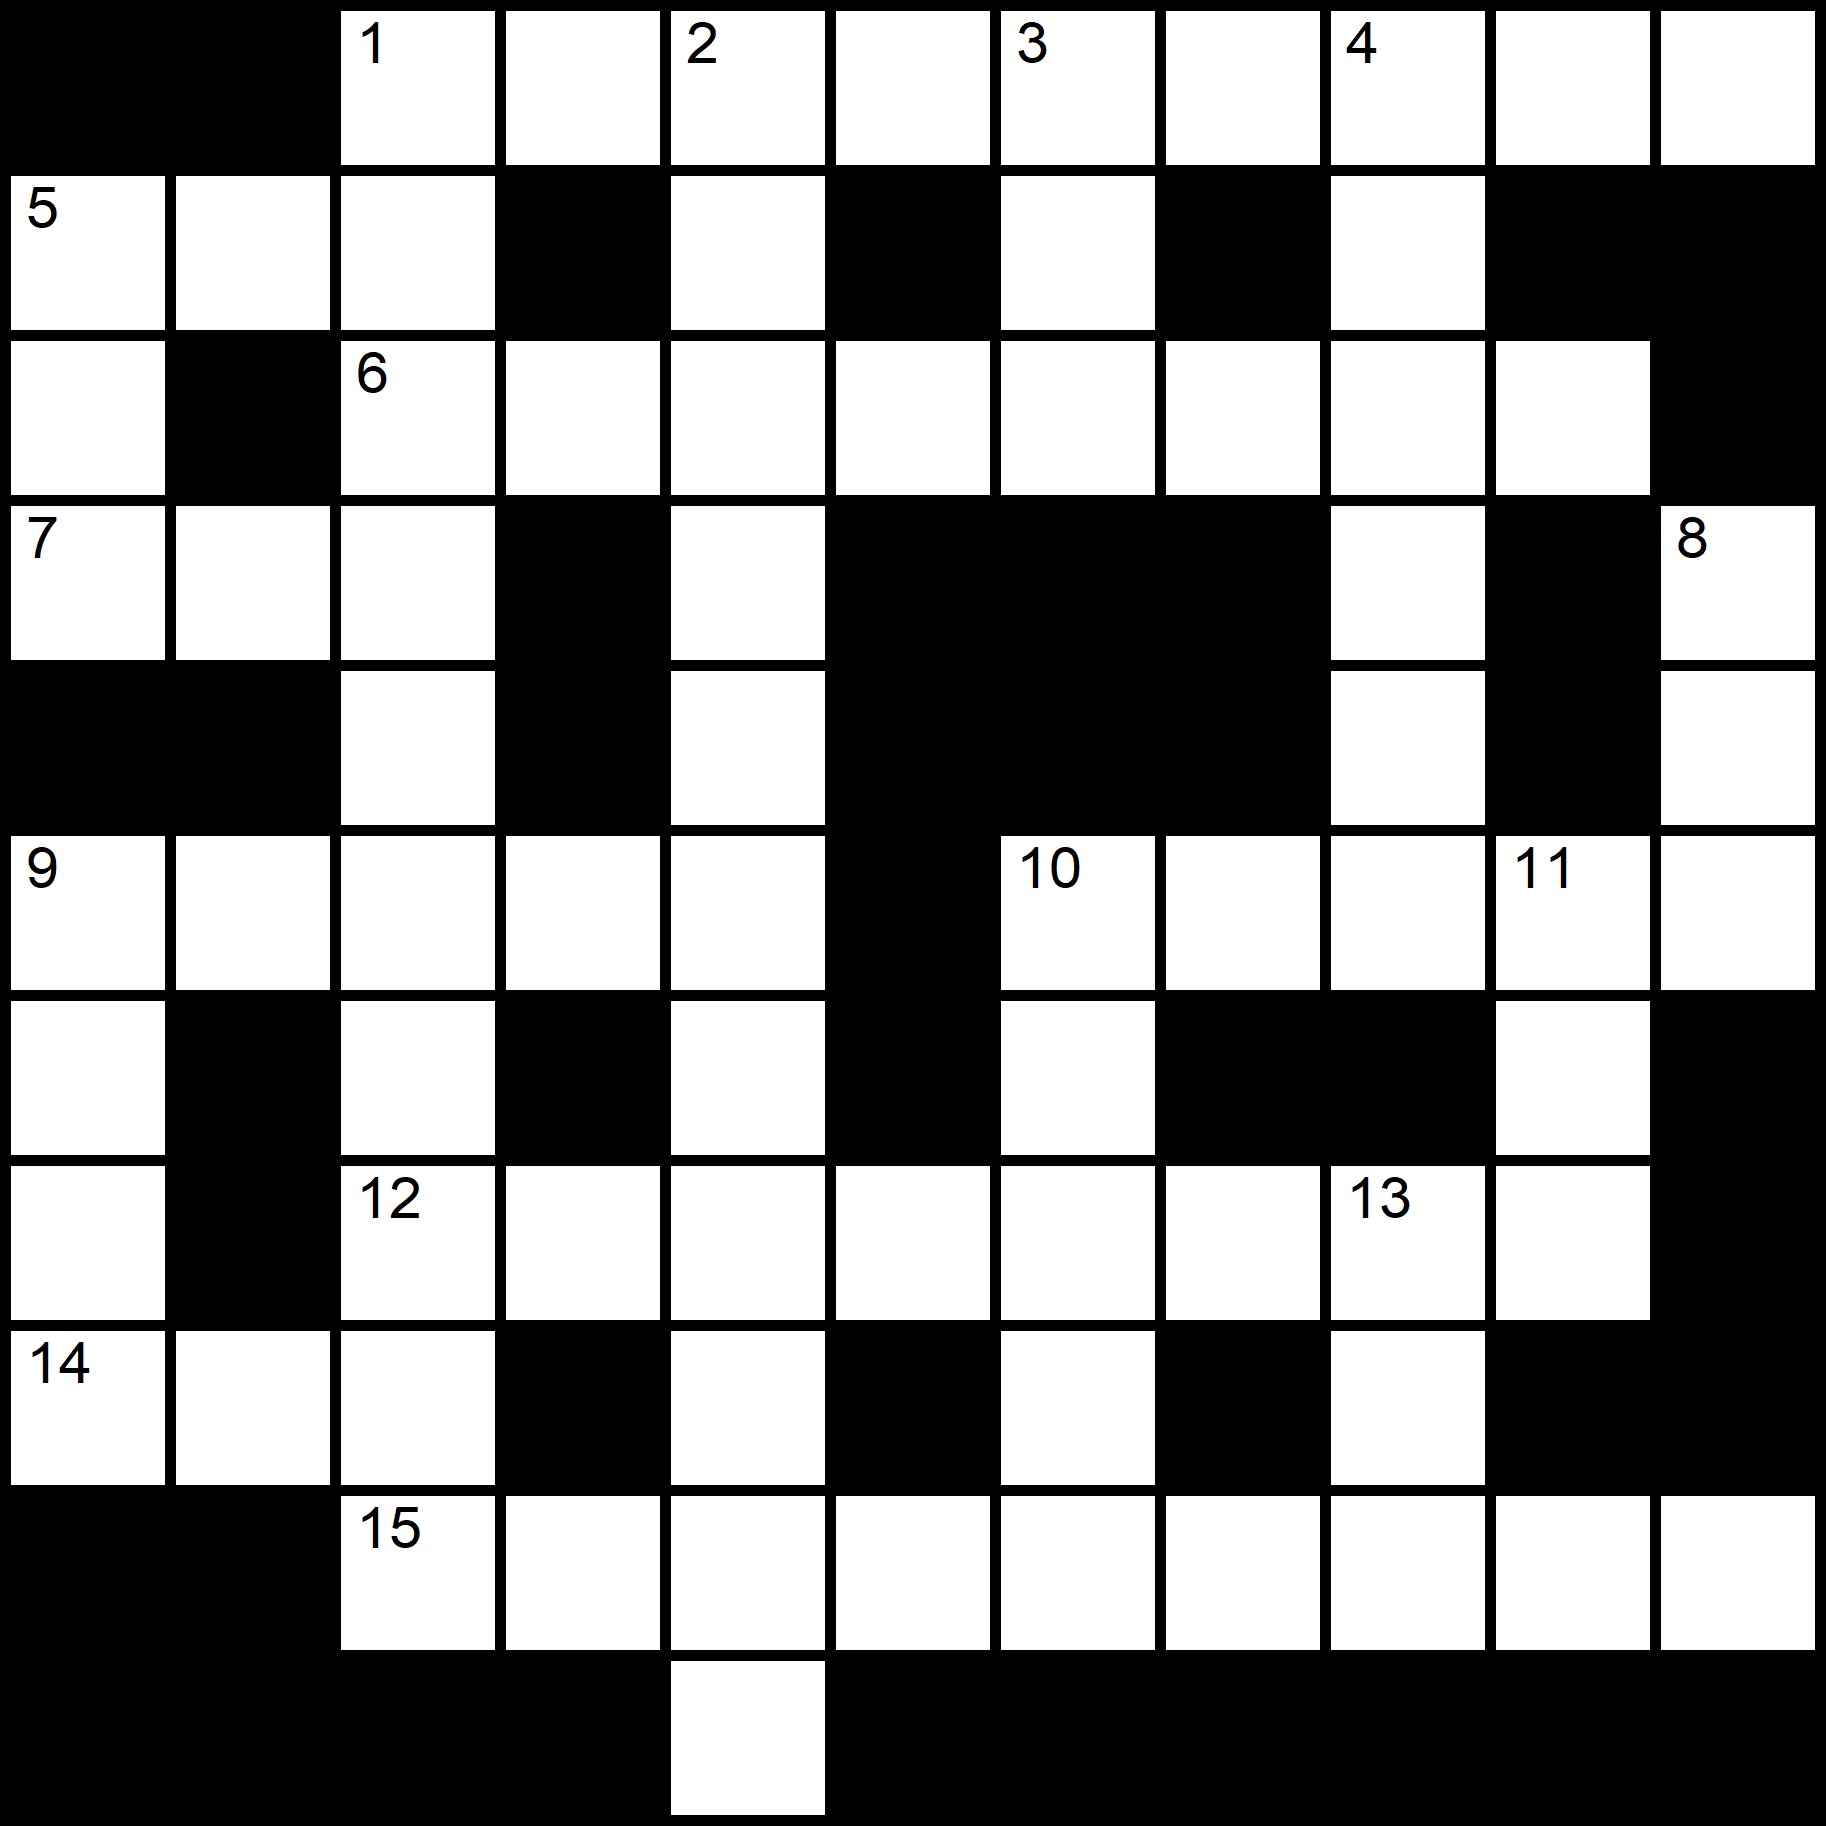 Easy Online Crossword Puzzles With Answer Key -
Placidus Flora - Crossword number twenty-five